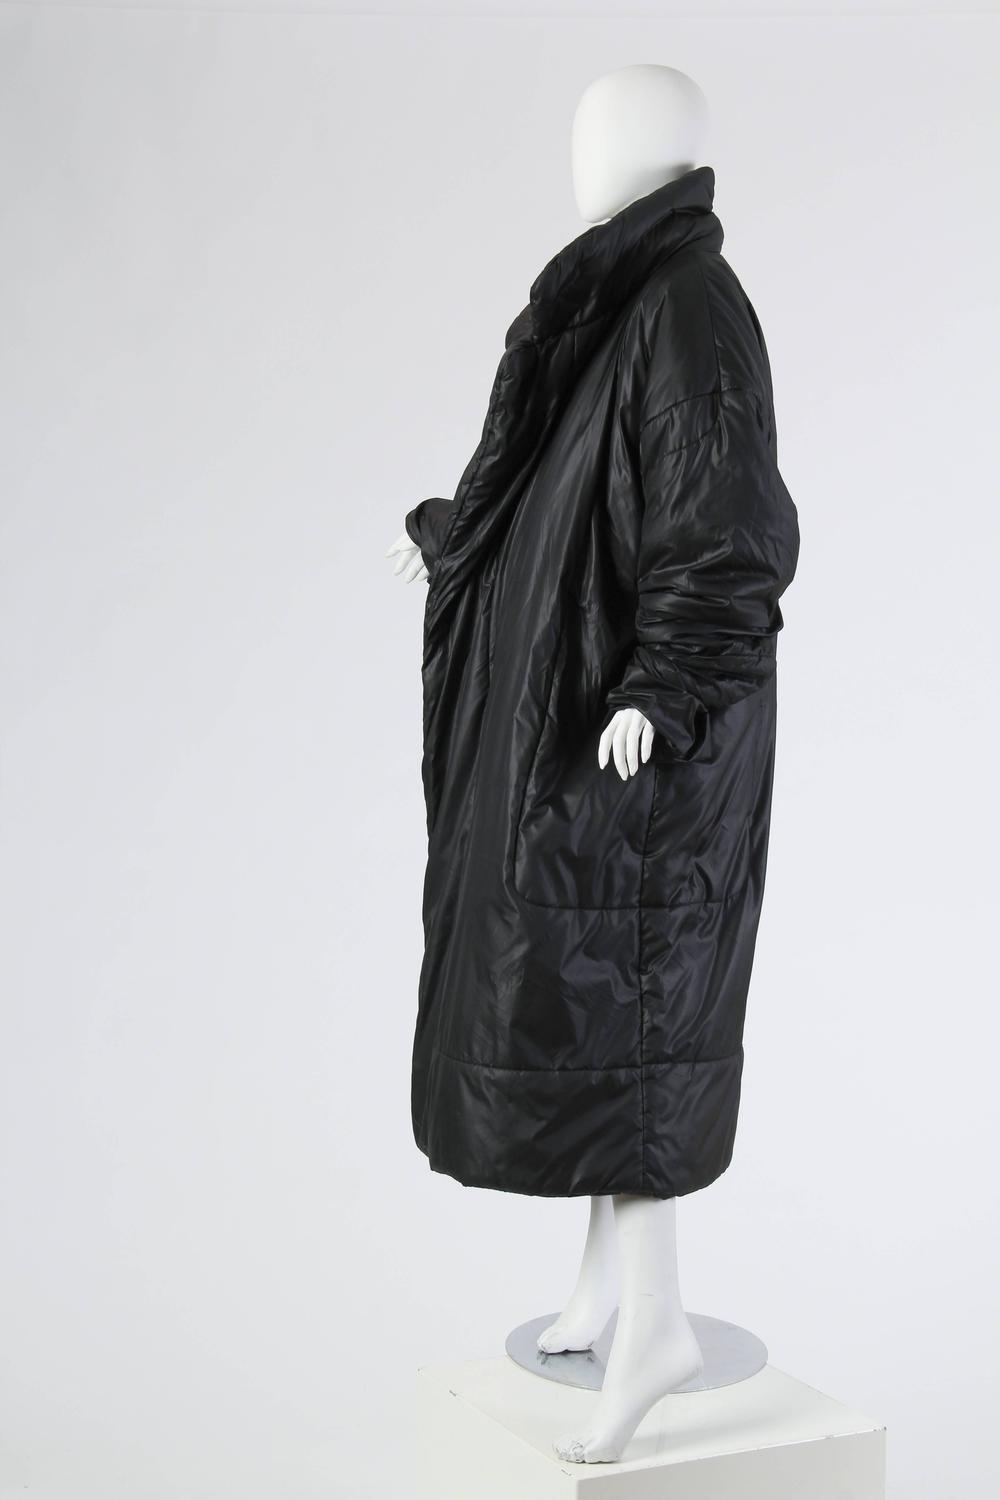 Iconic Norma Kamali Sleeping Bag Coat For Sale at 1stdibs